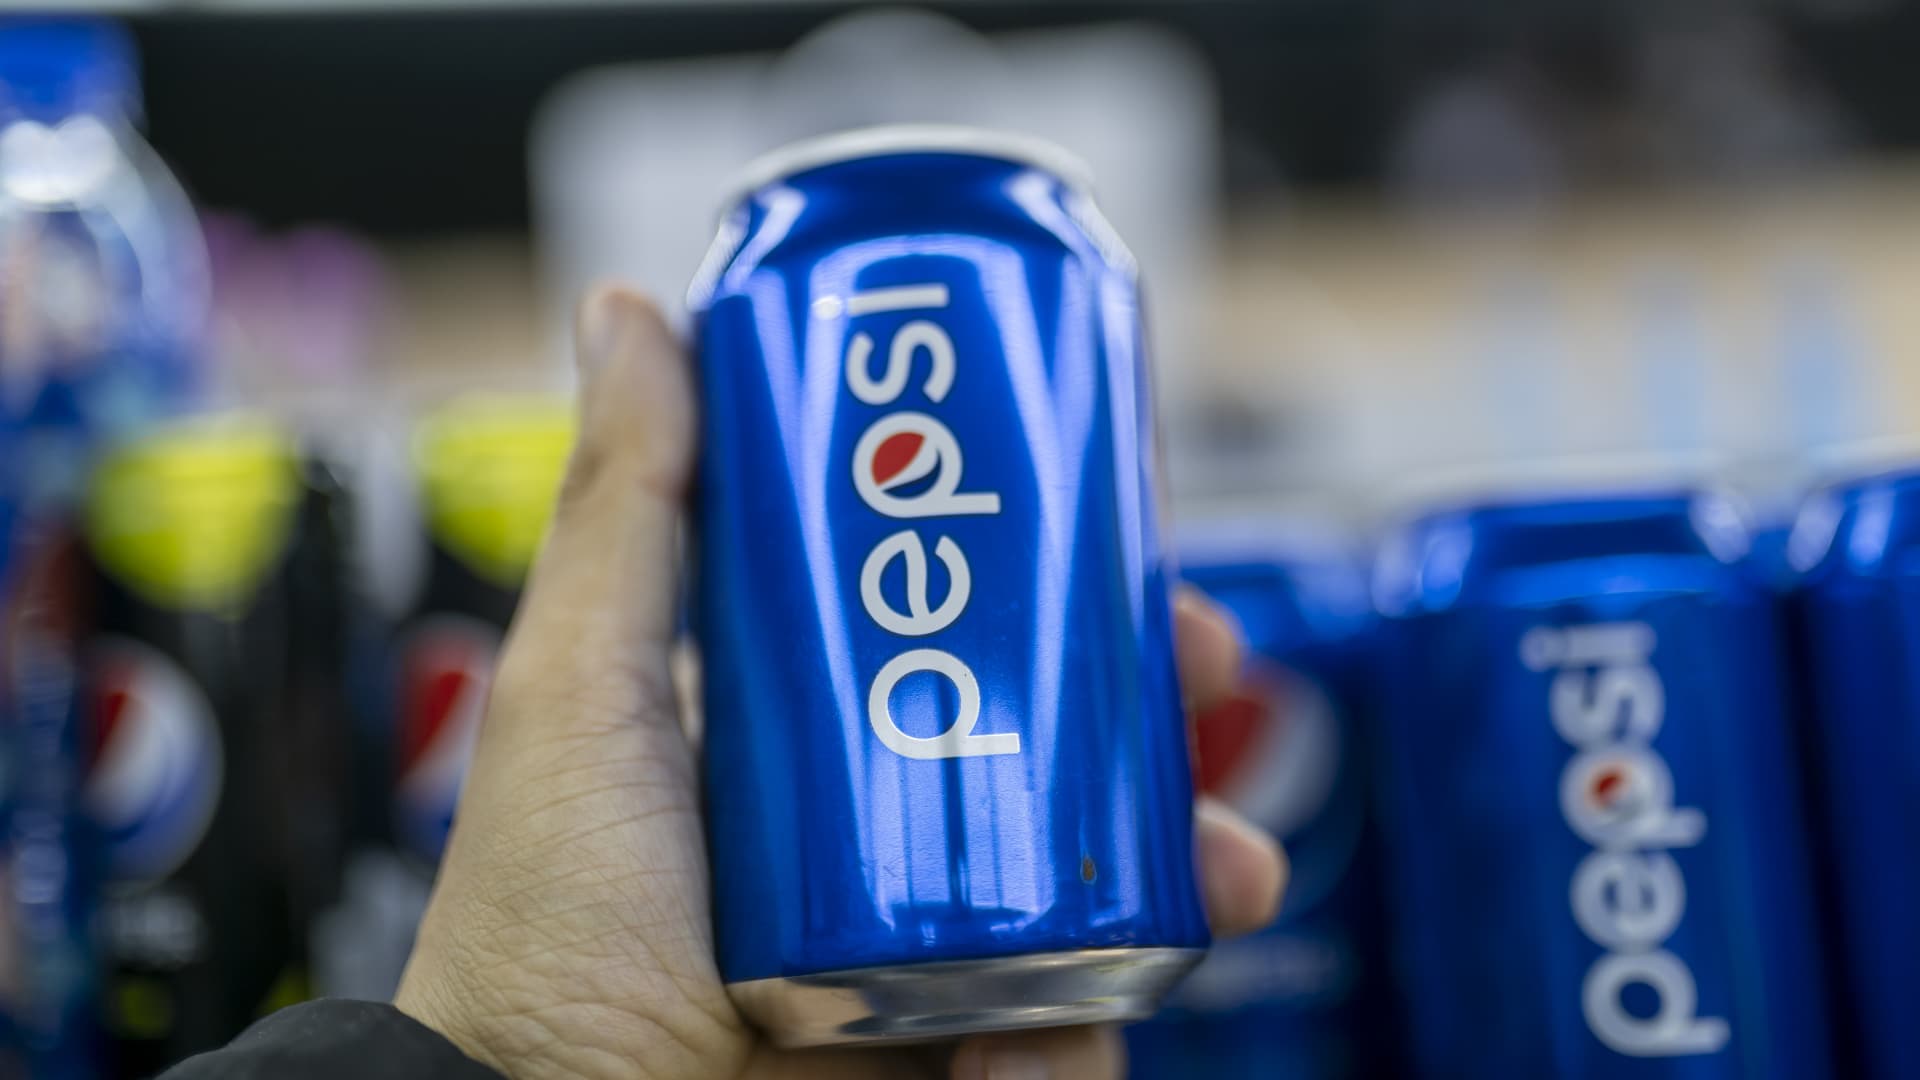 PepsiCo (PEP) Q2 2022 earnings beat Wall Street estimates